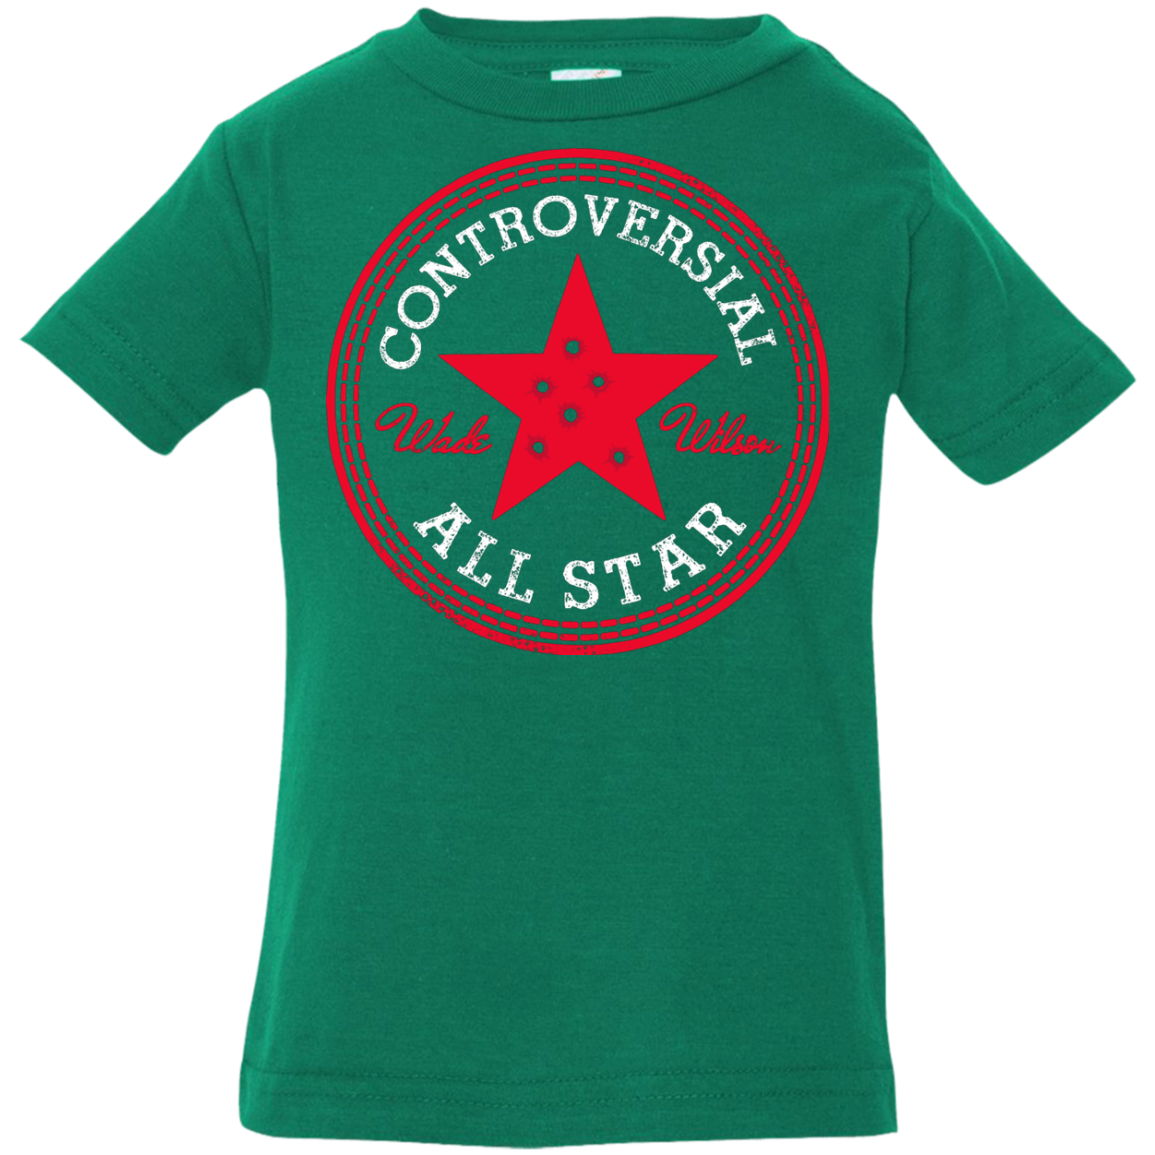 All Star Infant Premium T-Shirt